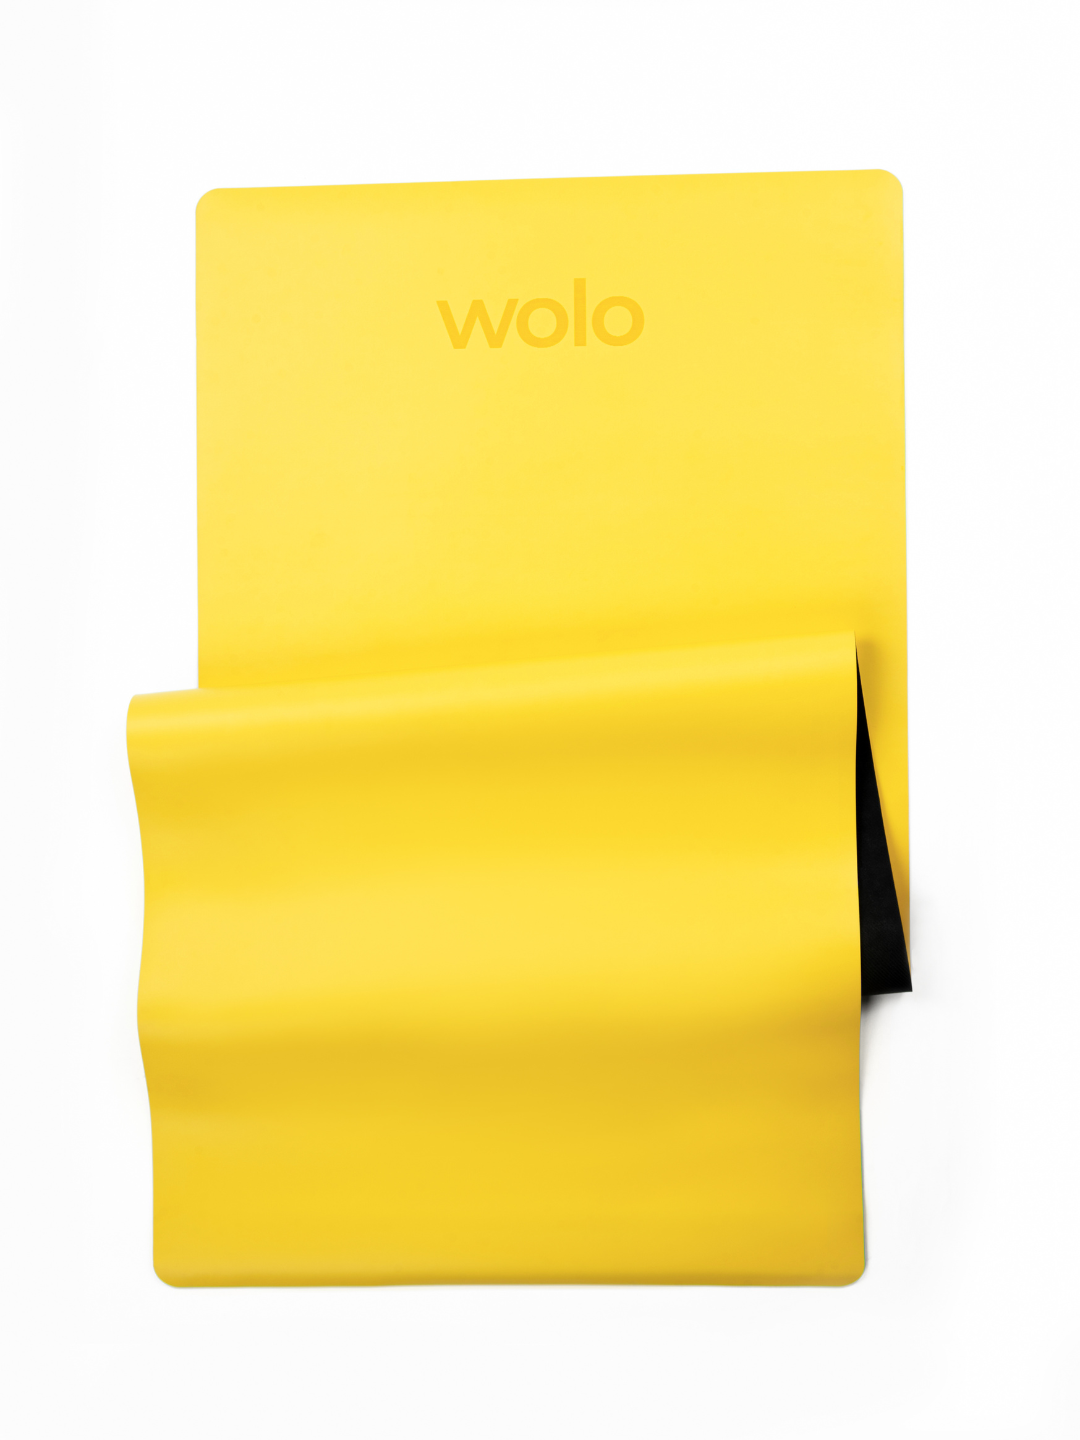 Close-up view of a Saffron yellow yoga mat